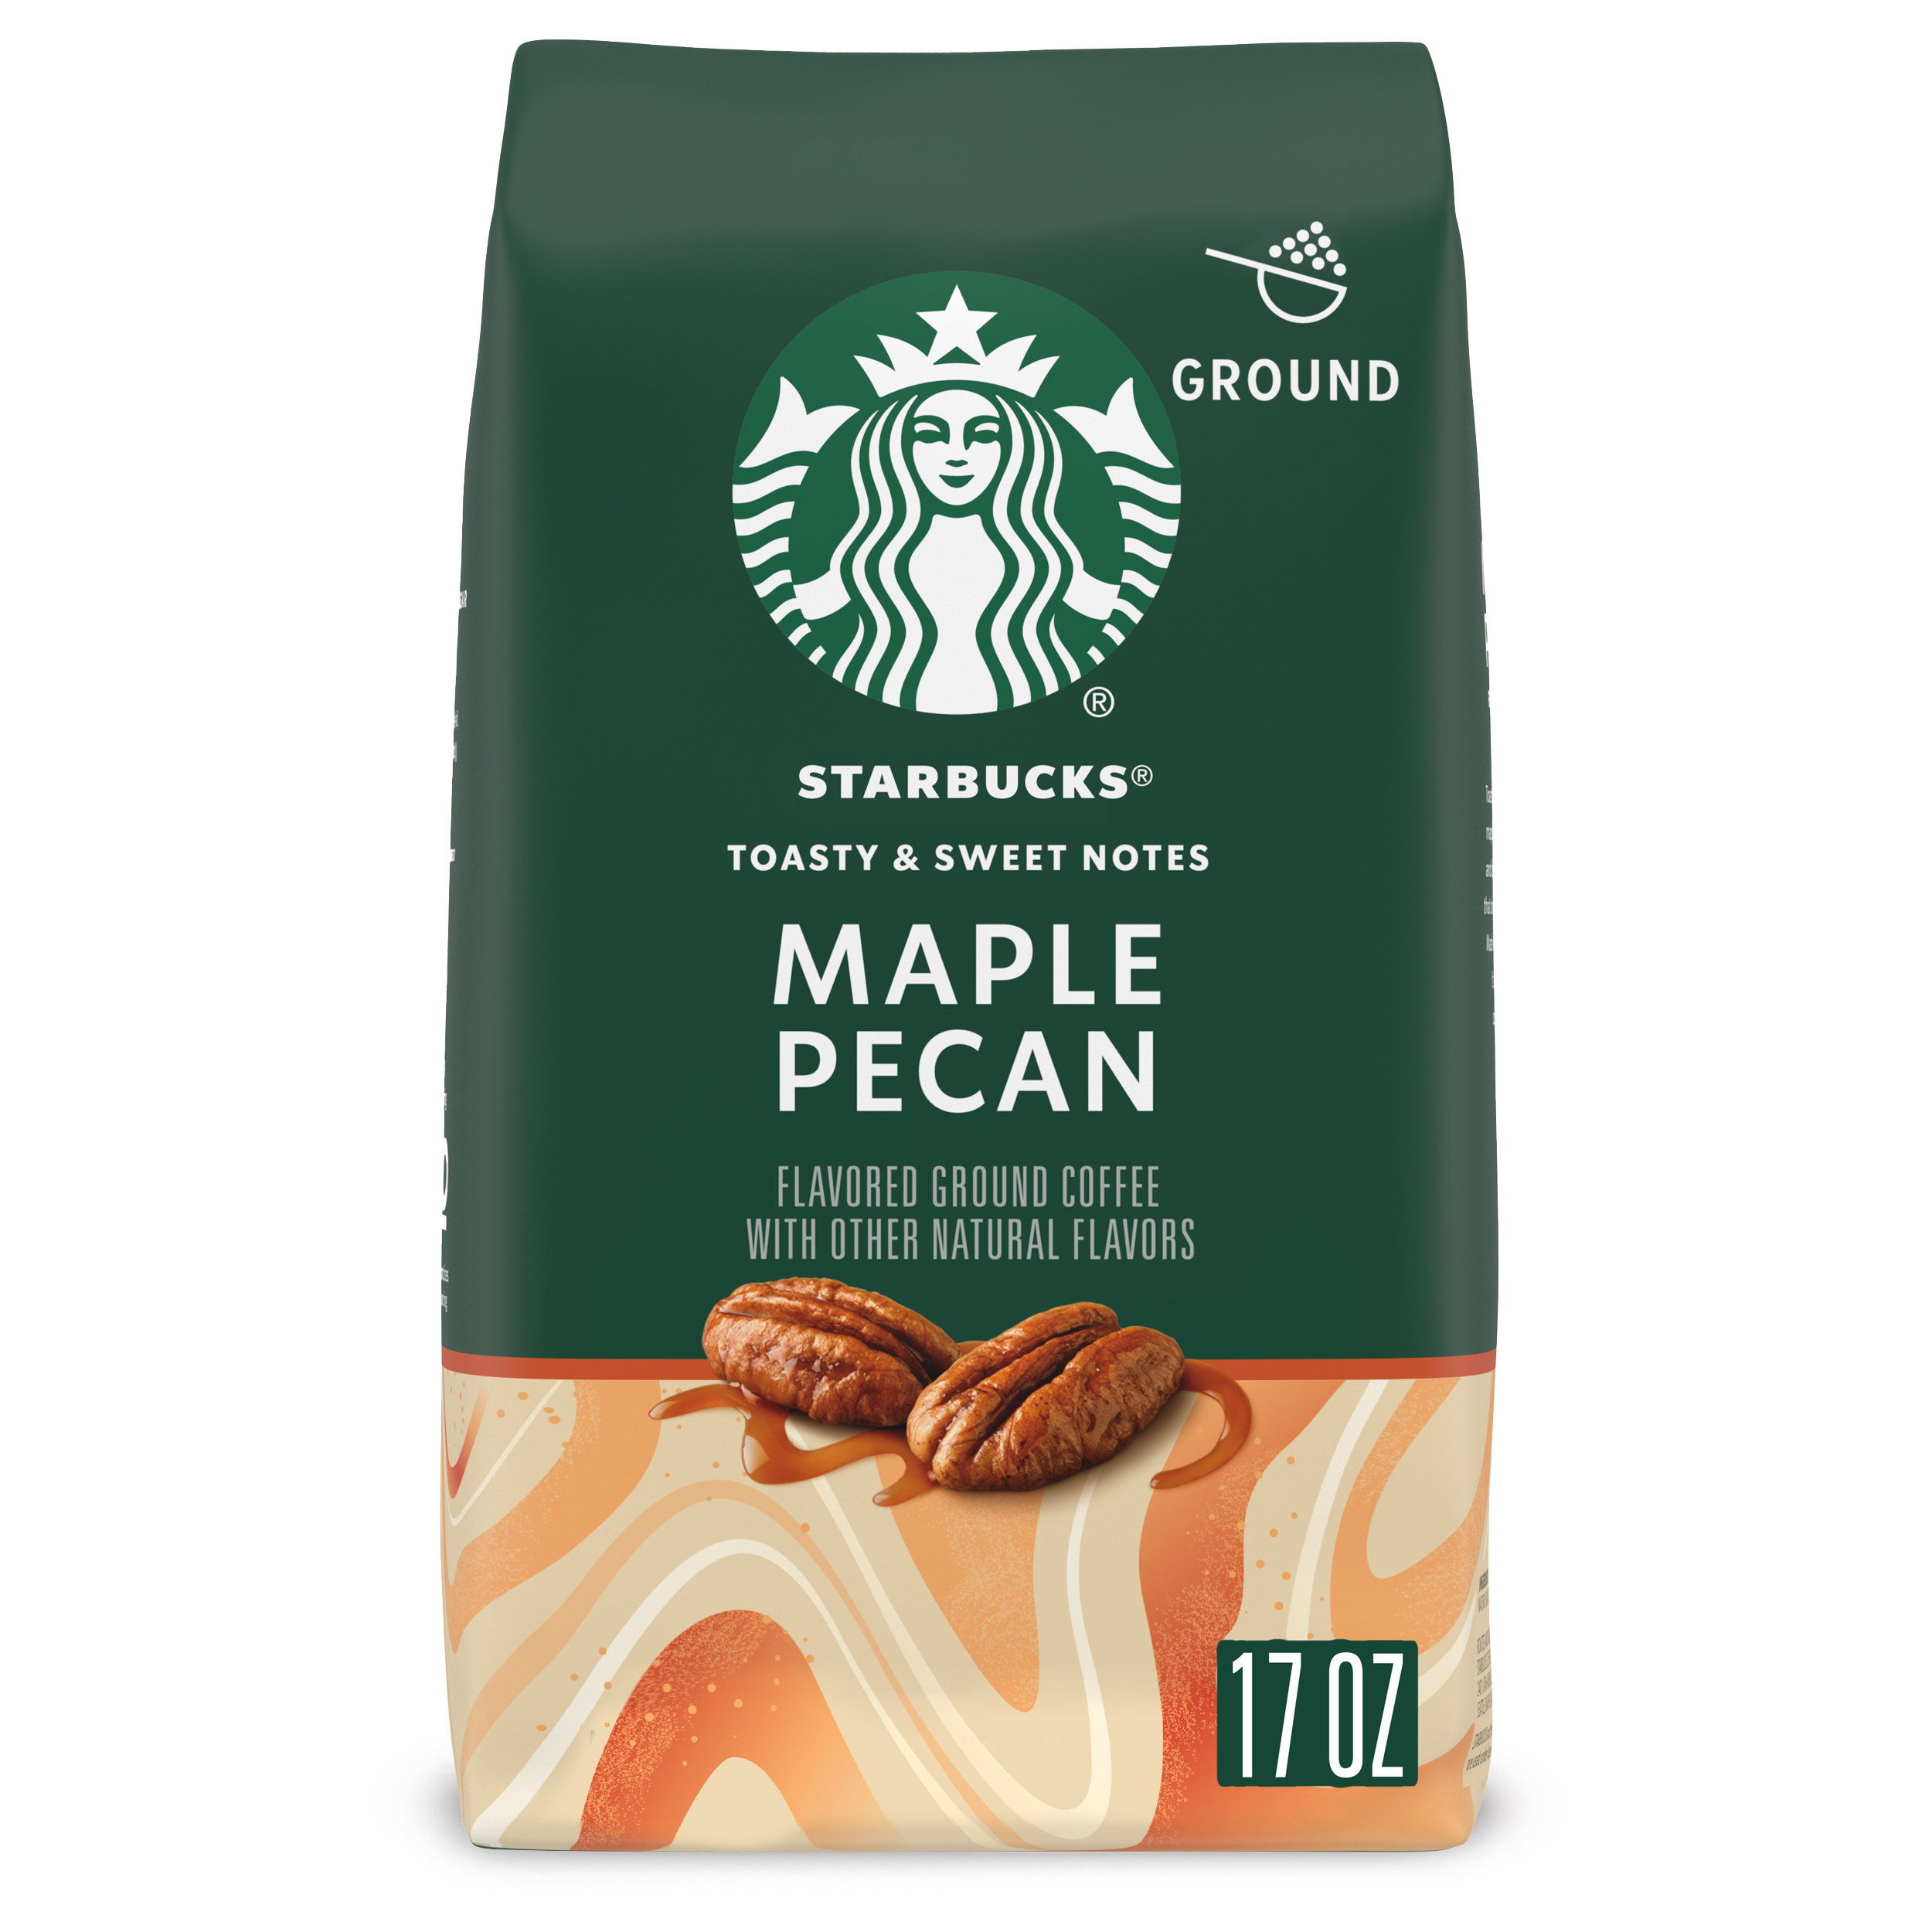 Starbucks Arabica Beans Maple Pecan, Light Roast, Ground Coffee, 17 oz - image 1 of 8